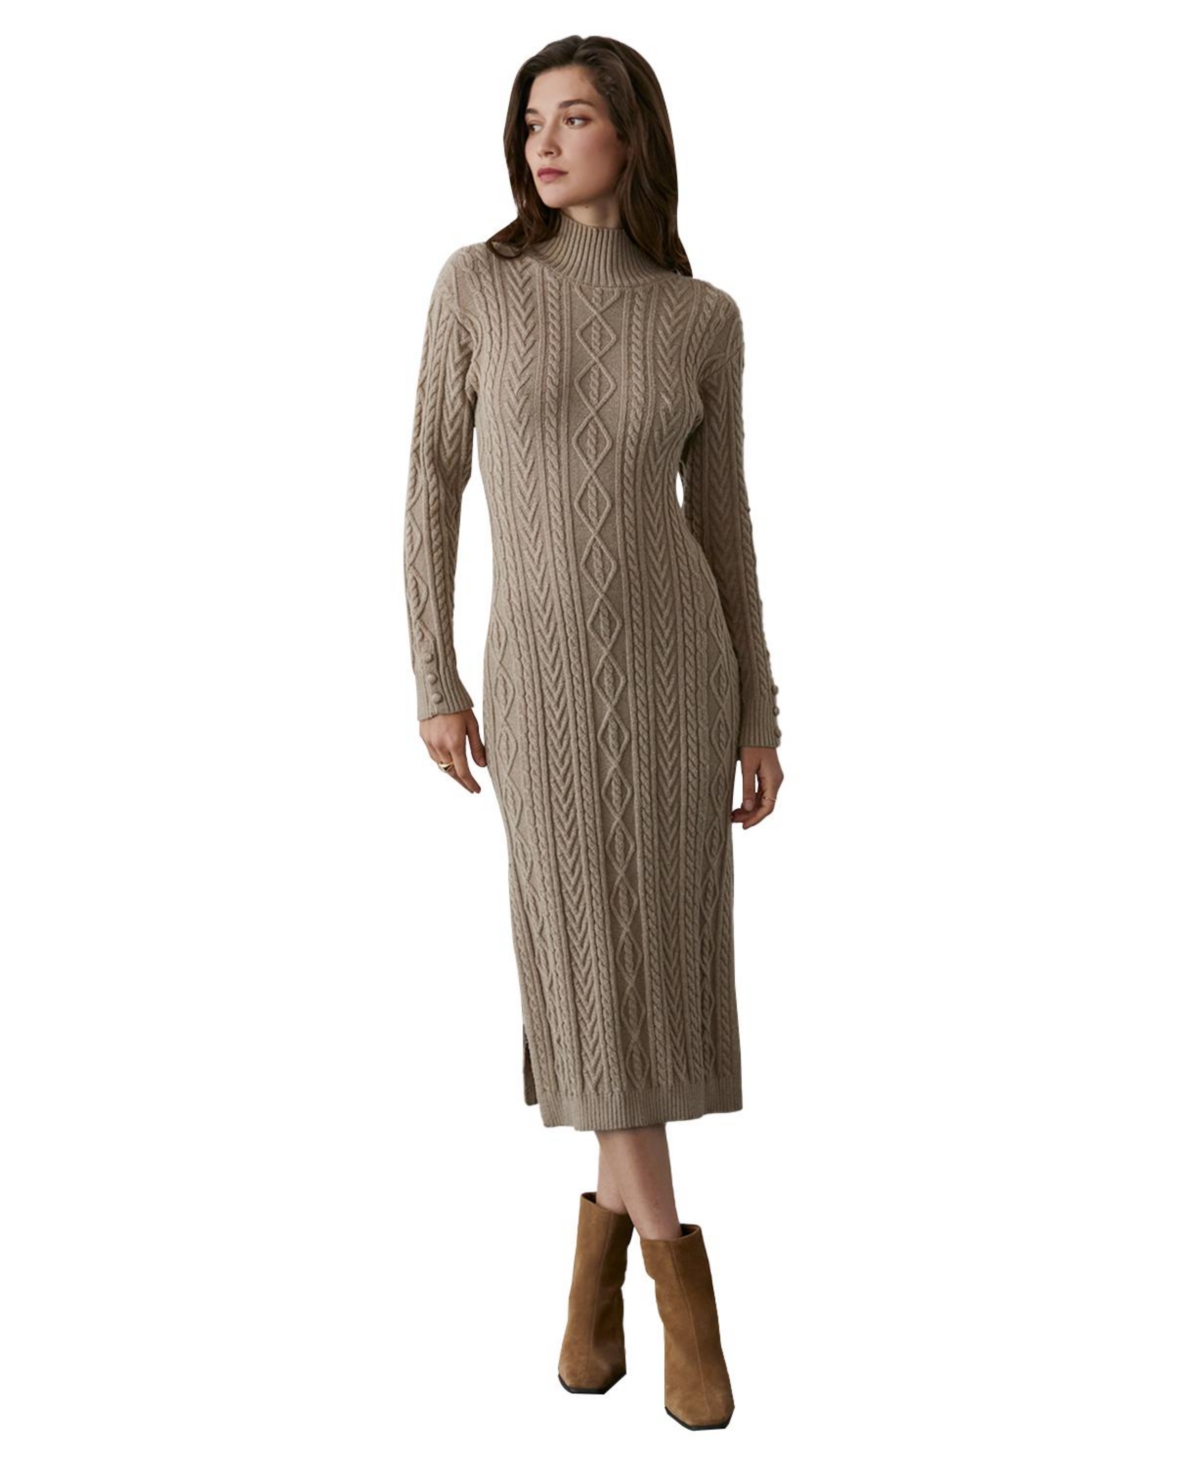 Women's Scarlett Cable Knit Midi Dress - Beige/khaki + taupe